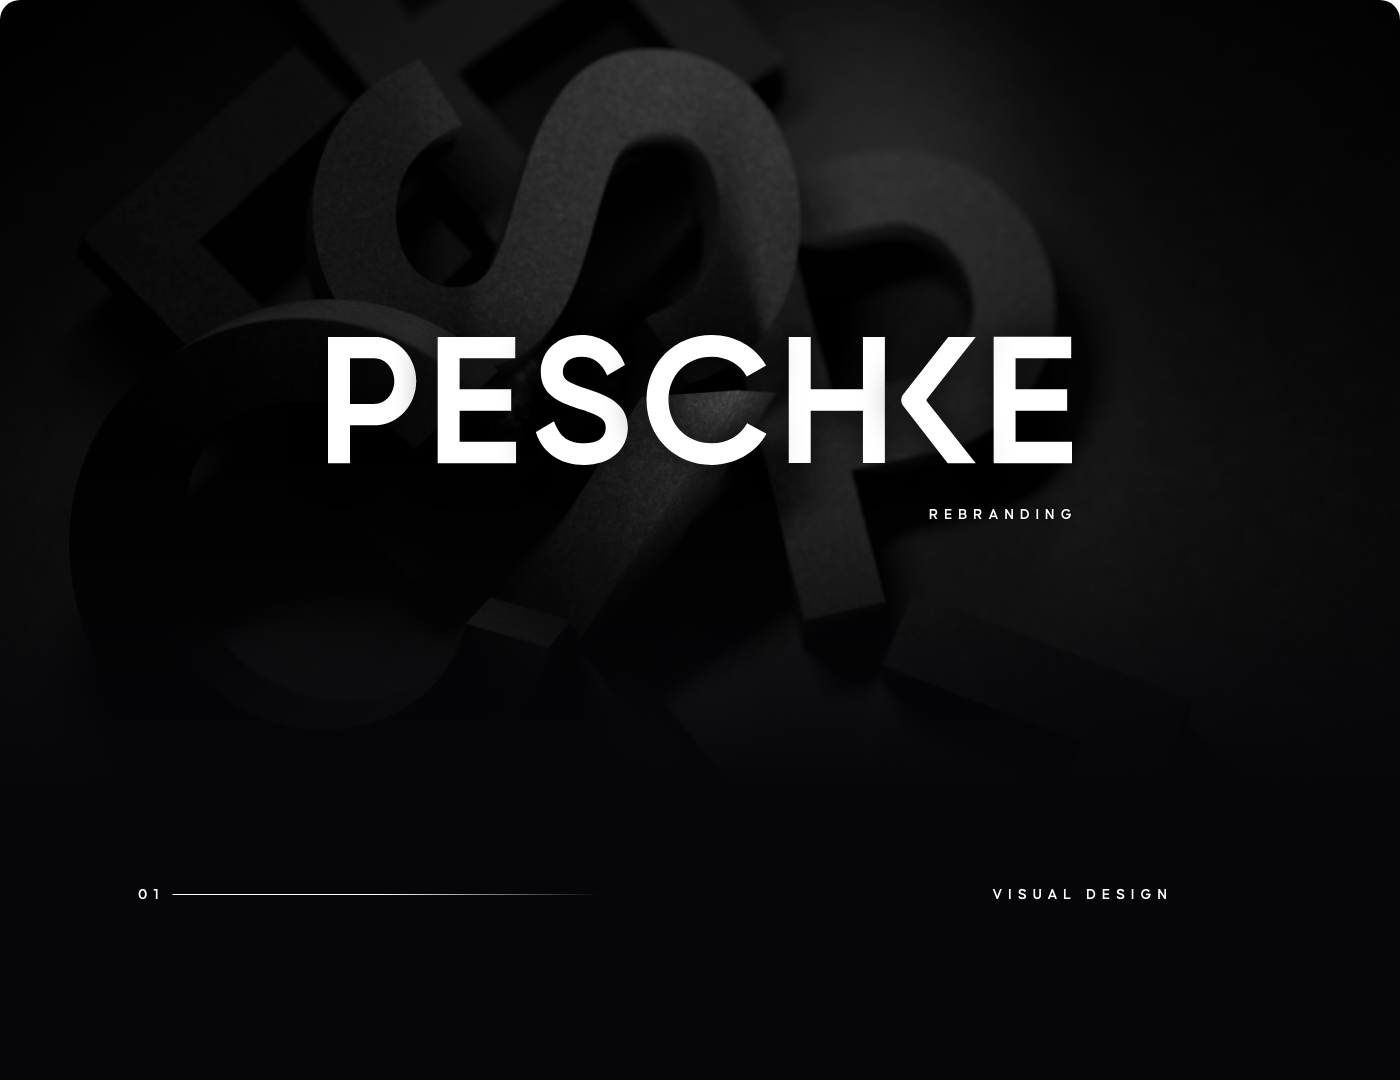 PESCHKE Rebranding Introduction